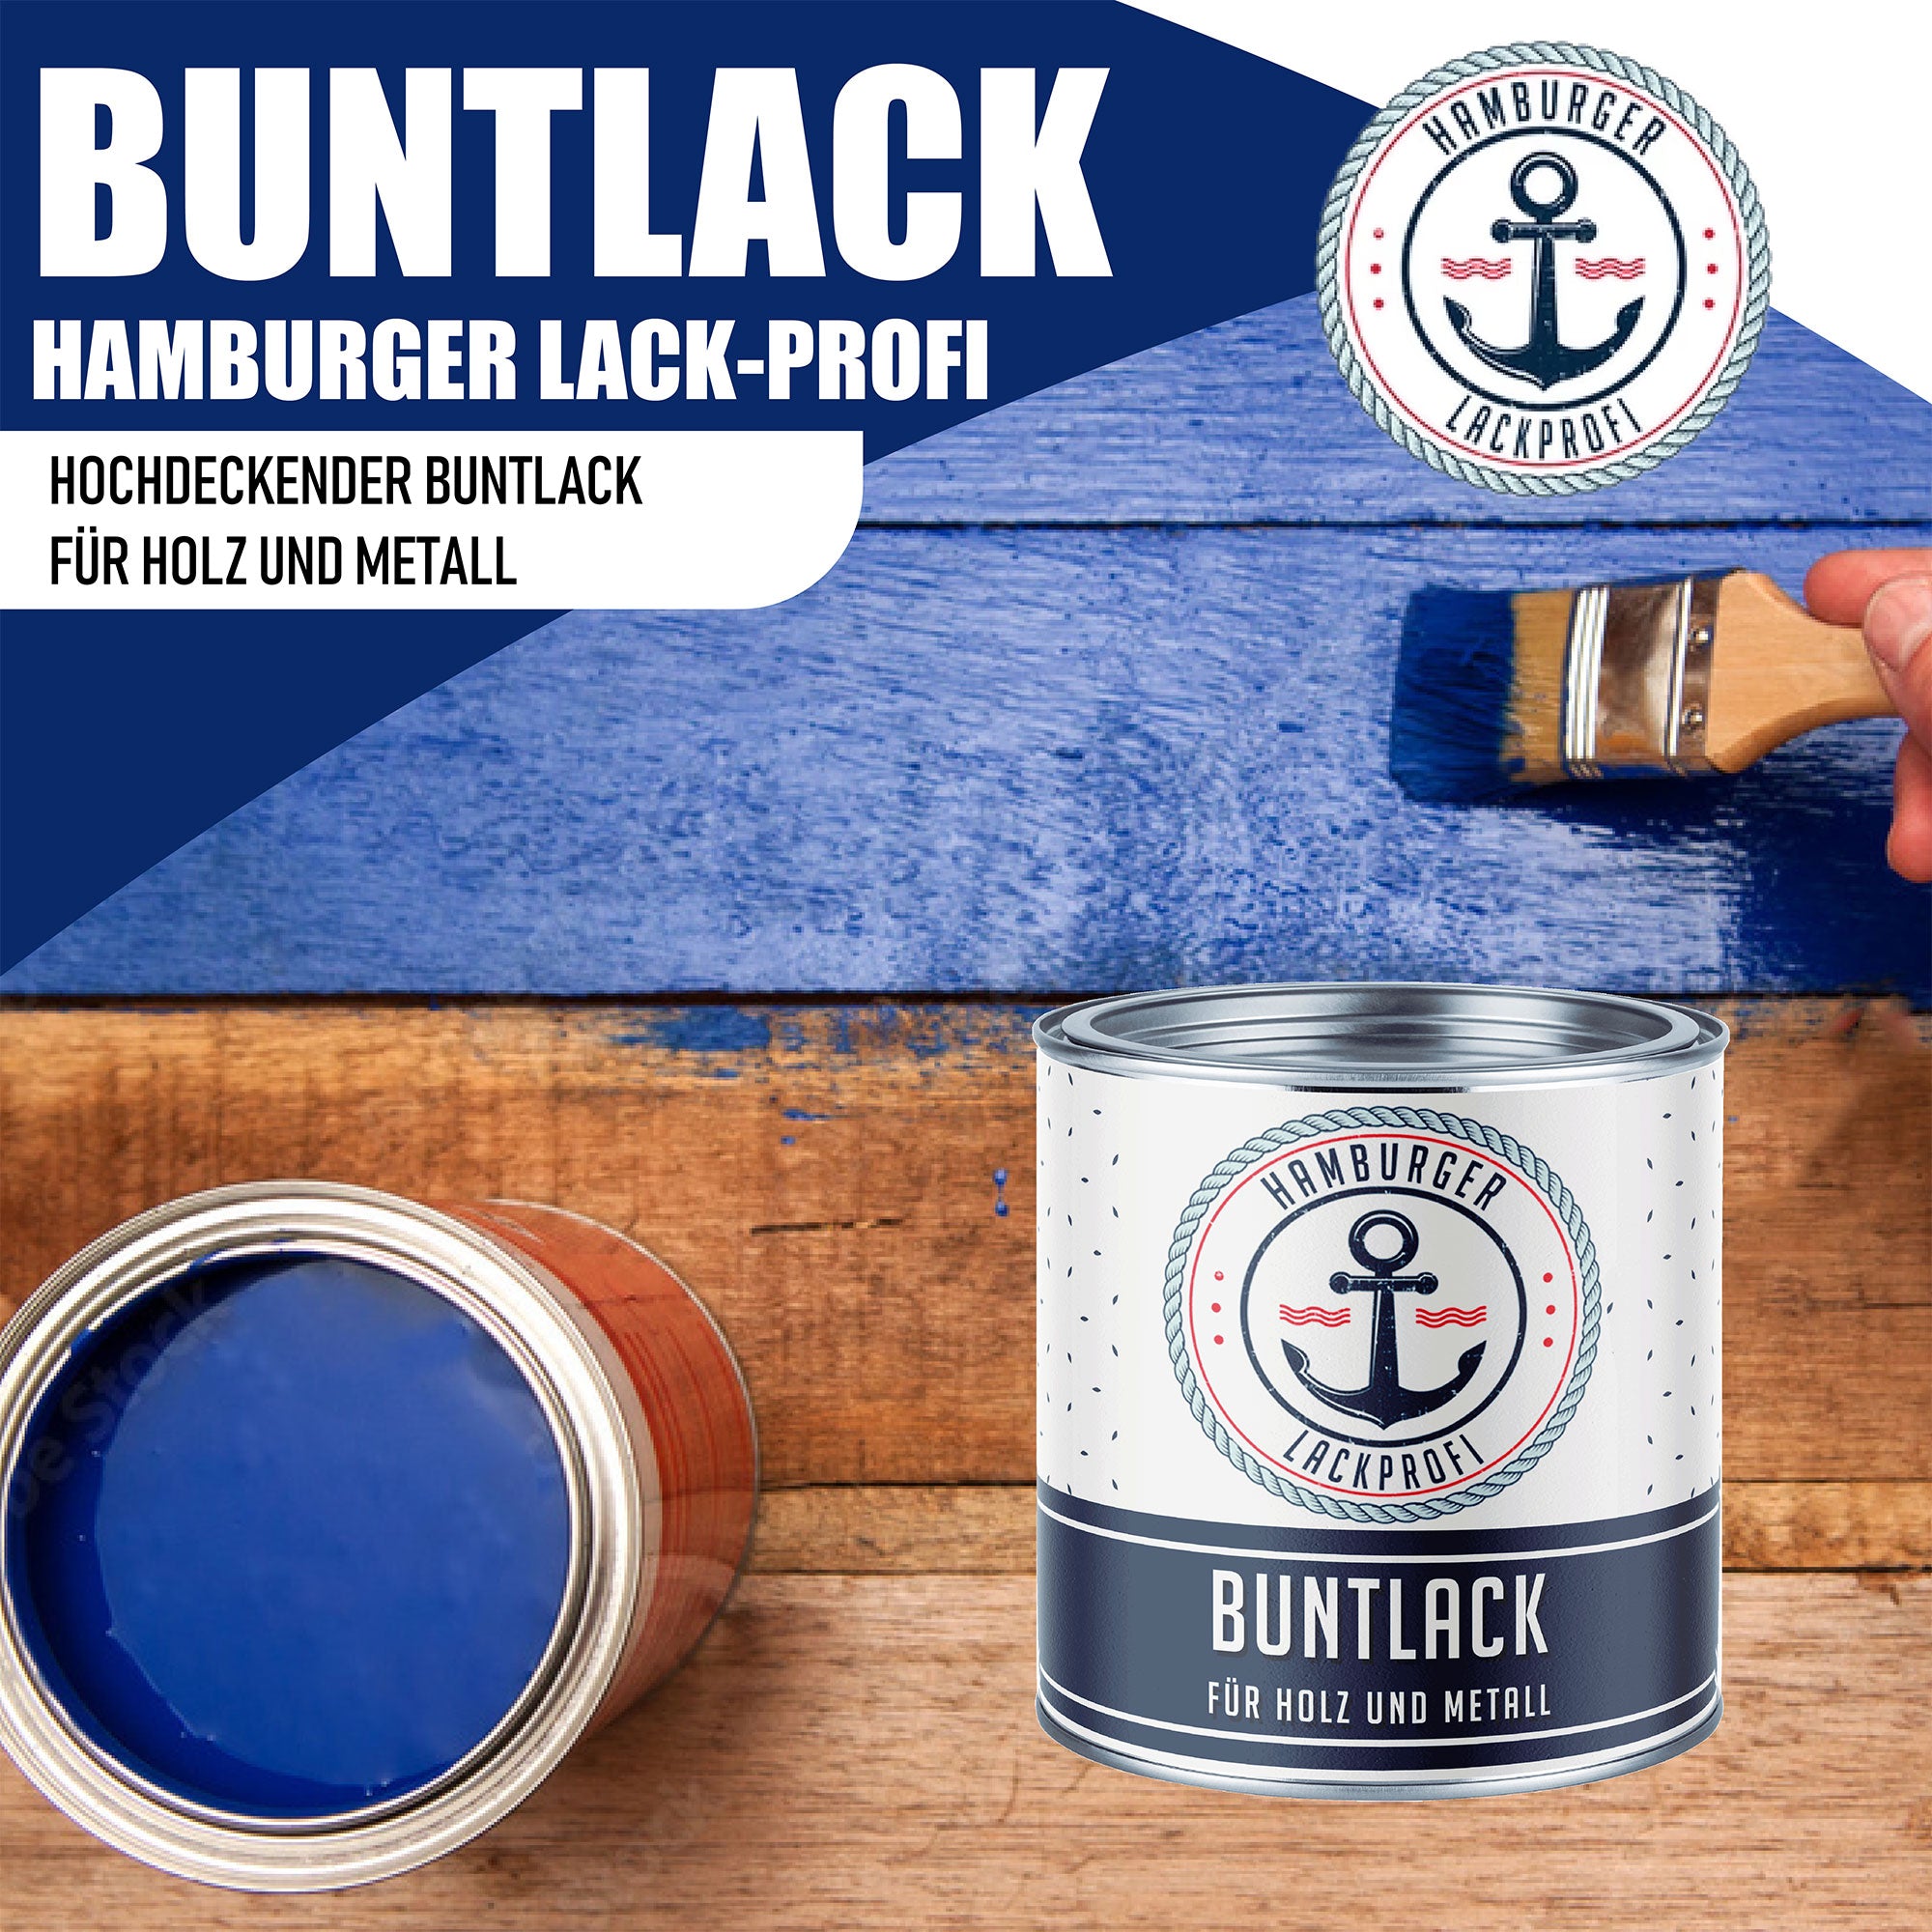 Hamburger Lack-Profi Buntlack Staubgrau RAL 7037 - Robuster Kunstharzlack